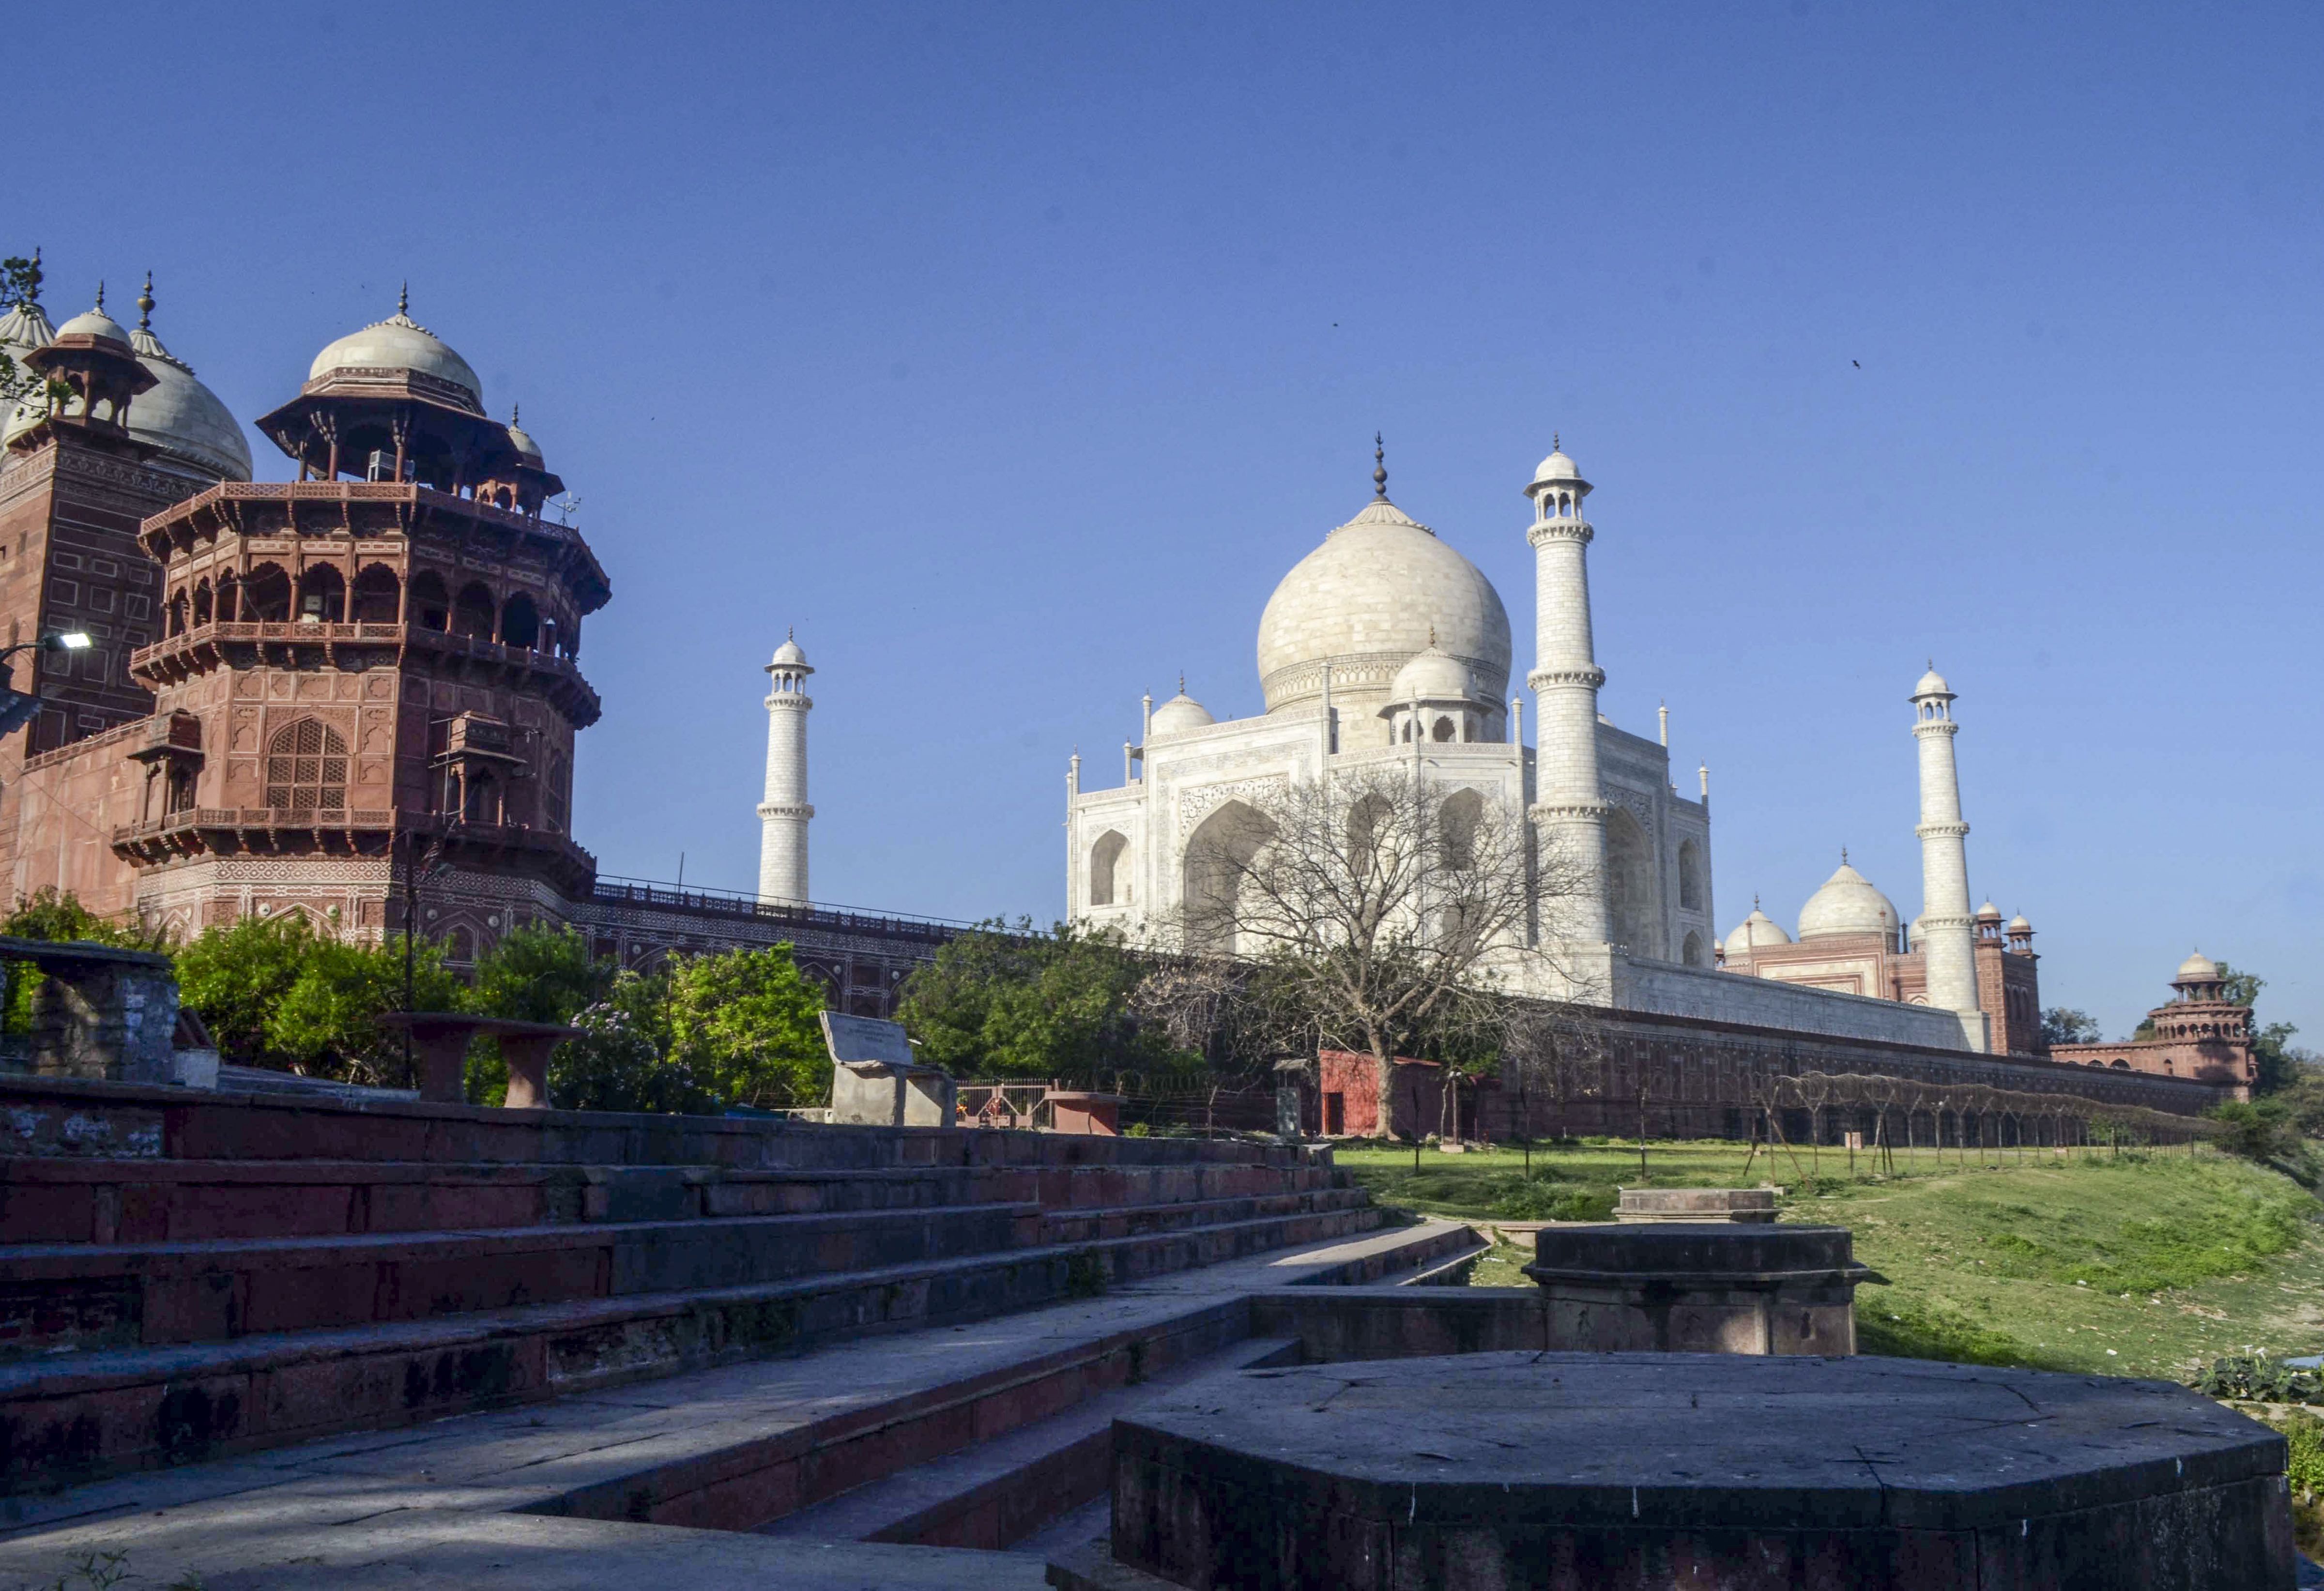 The Taj Mahal with blue skies